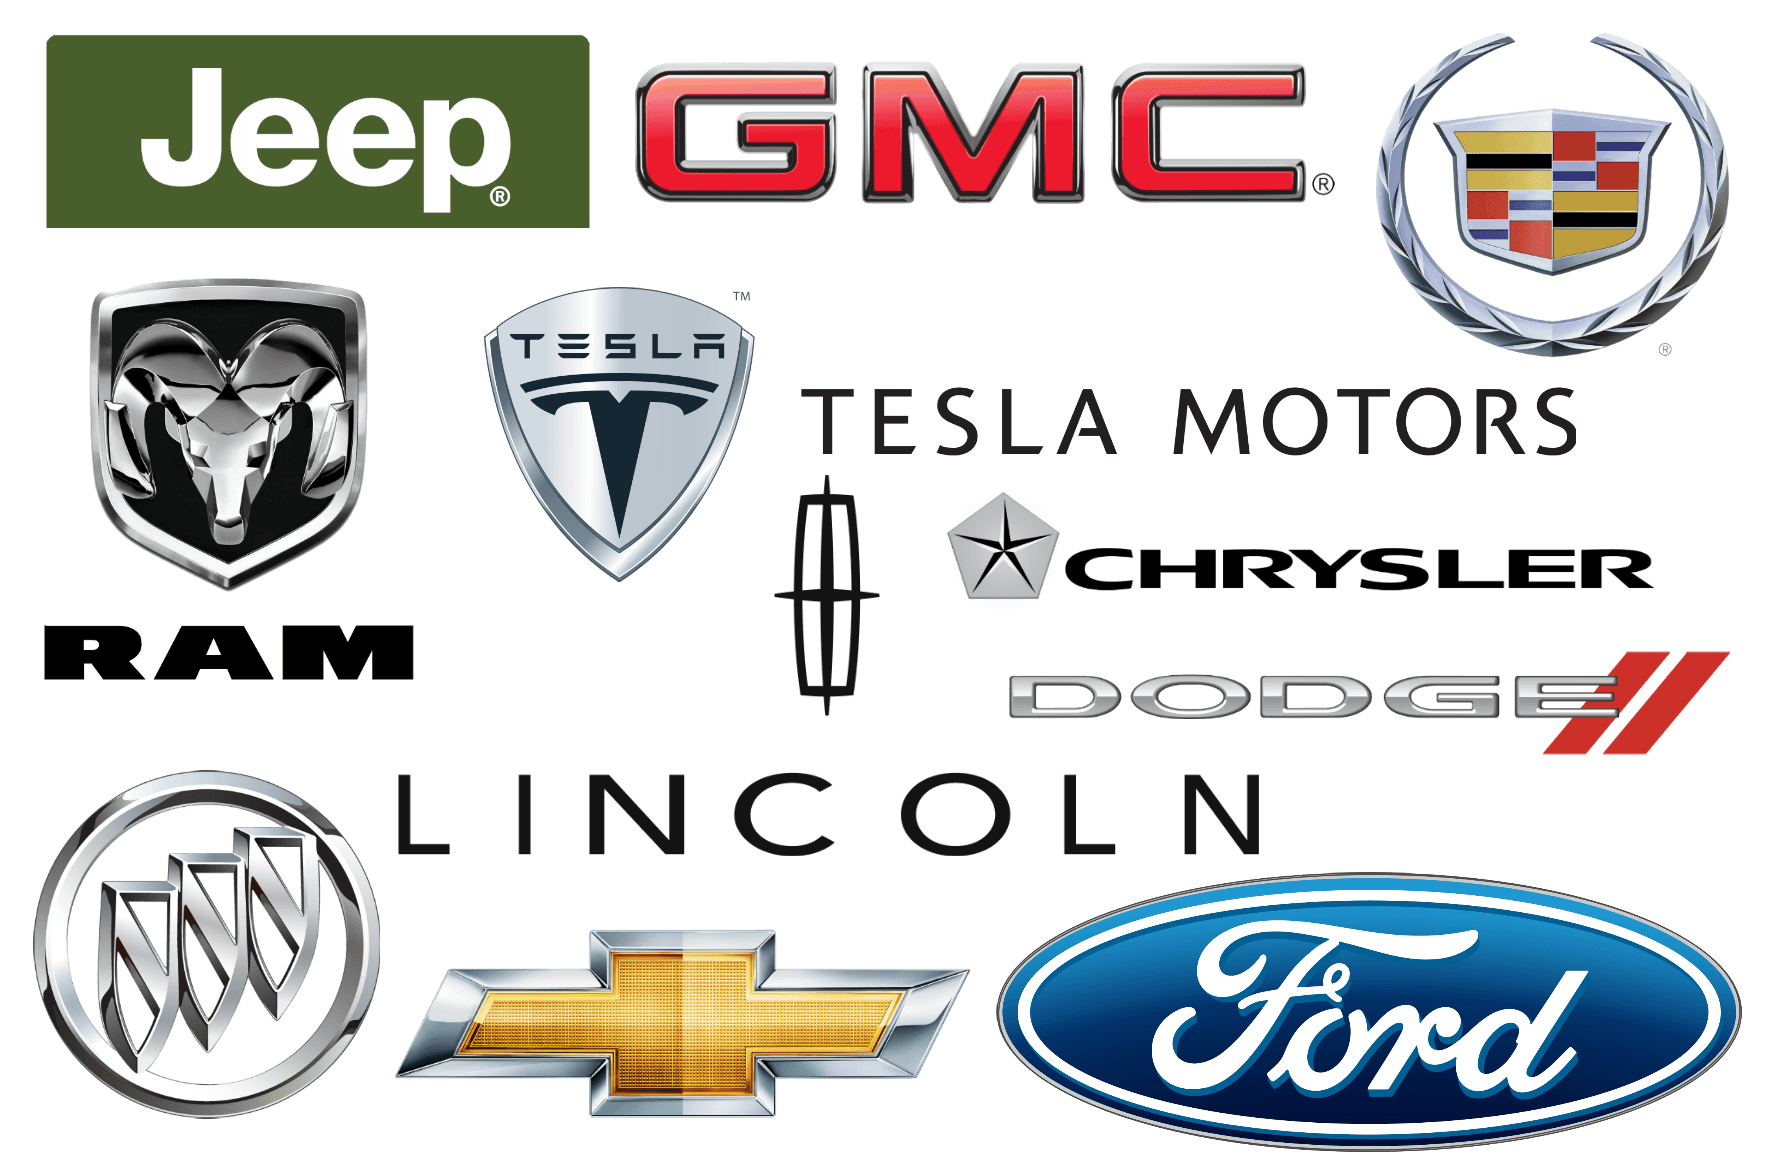 Truck Brand Logo - American Car Brands, Companies and Manufacturers | Car Brand Names.com